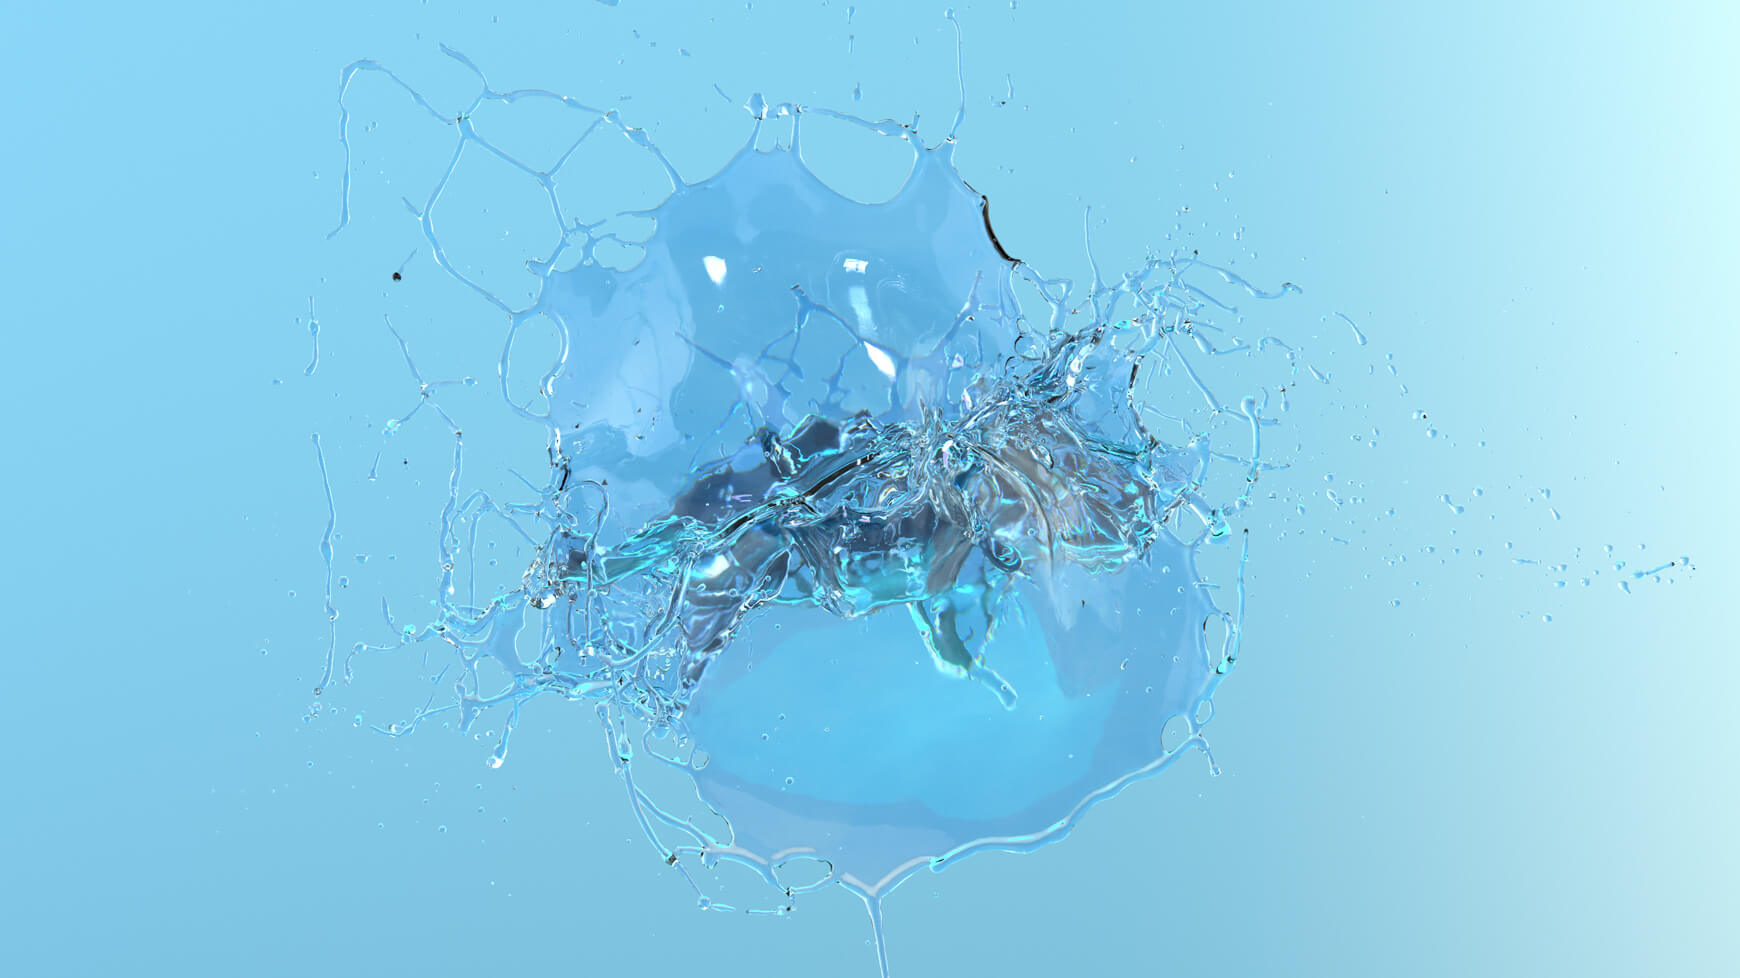 3D Water Splash Animation Fluid Effect 3 VFX